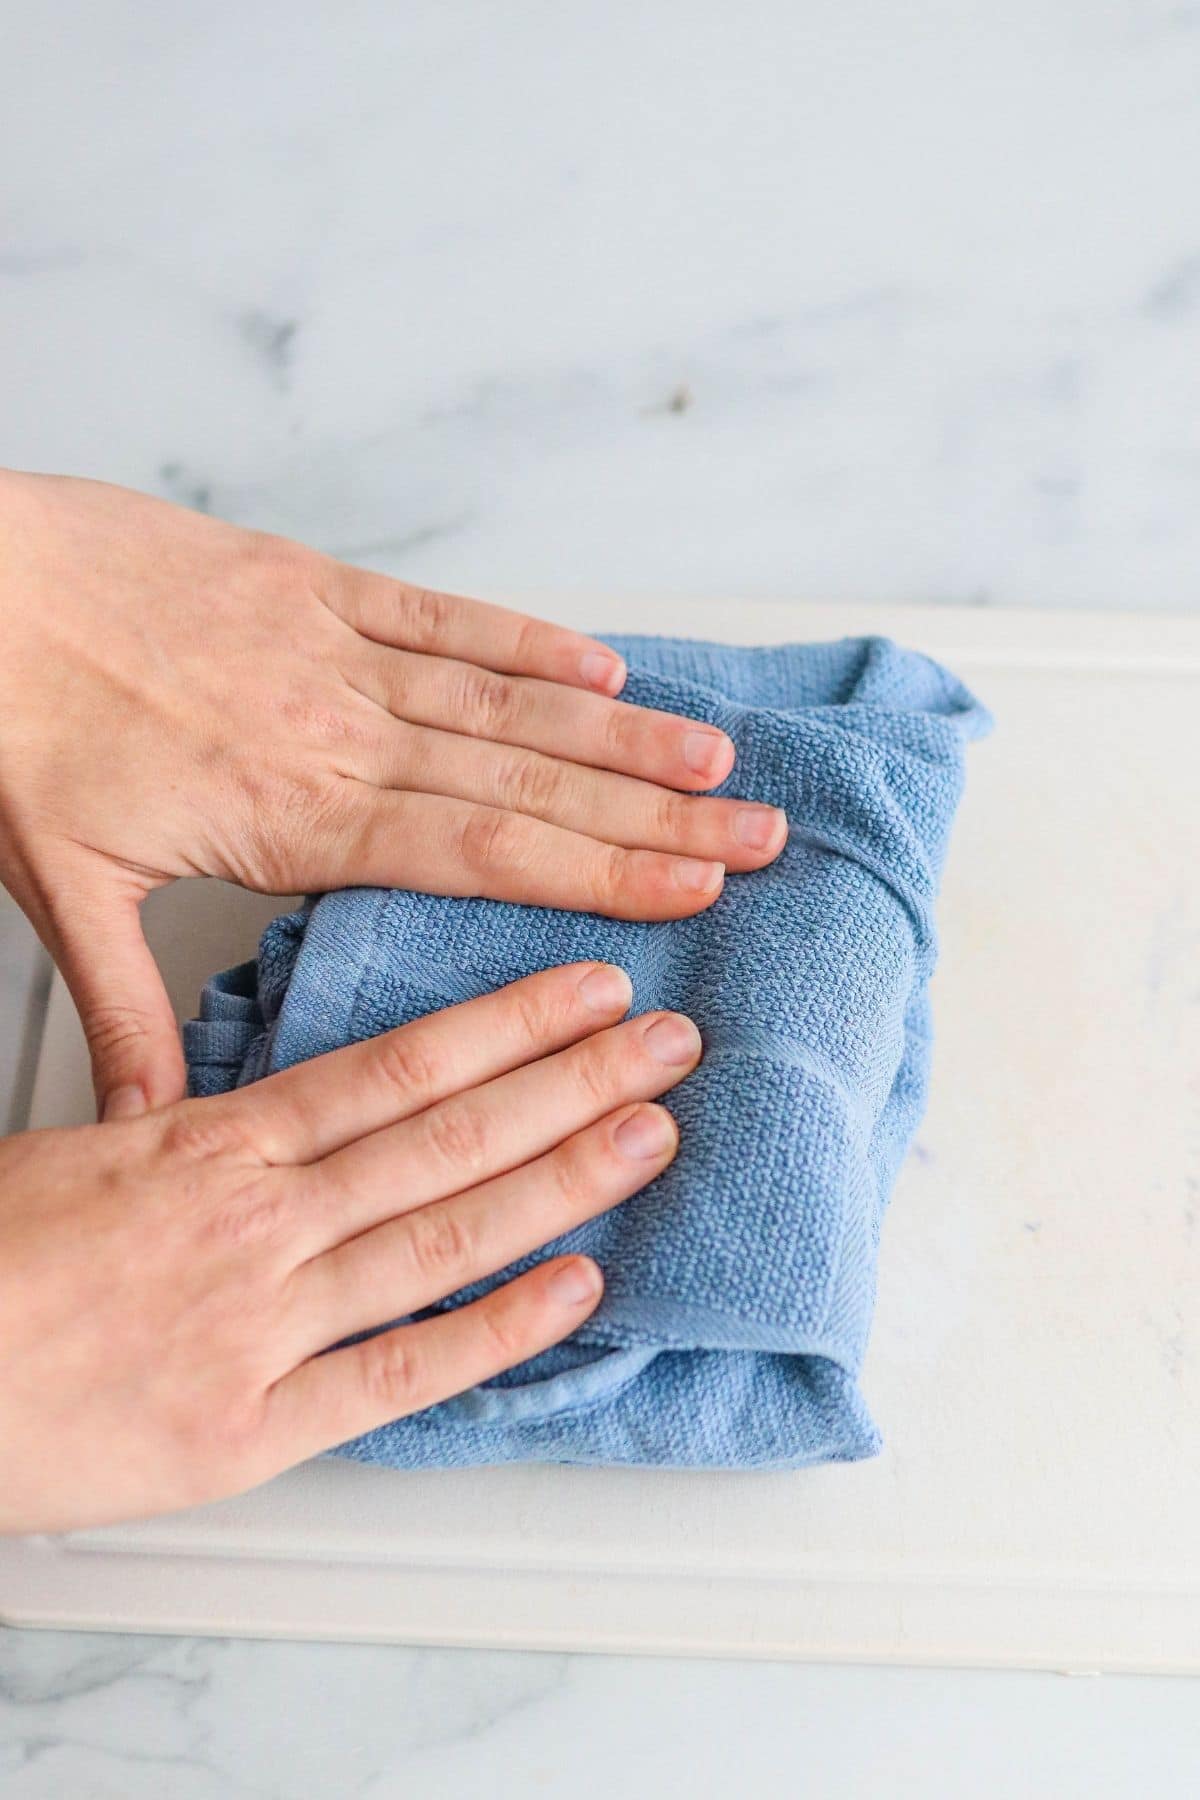 hands folding a blue towel over tofu to press.